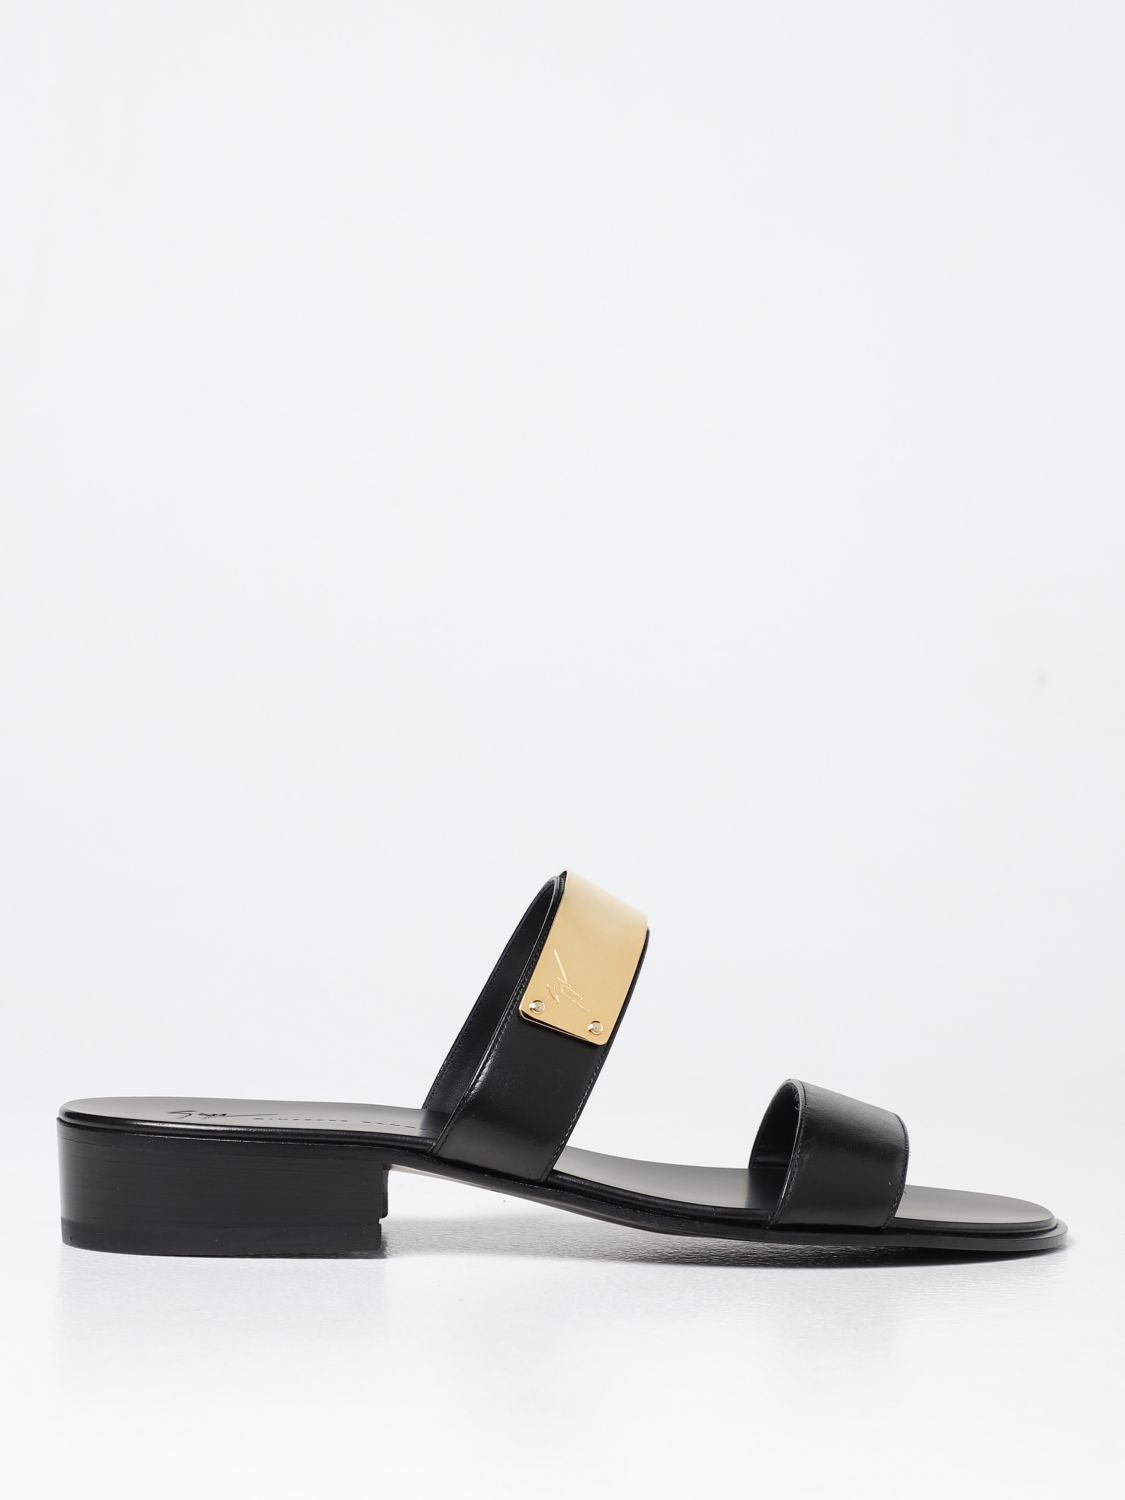 Black Giuseppe Zanotti sandals. - modernprecast.com